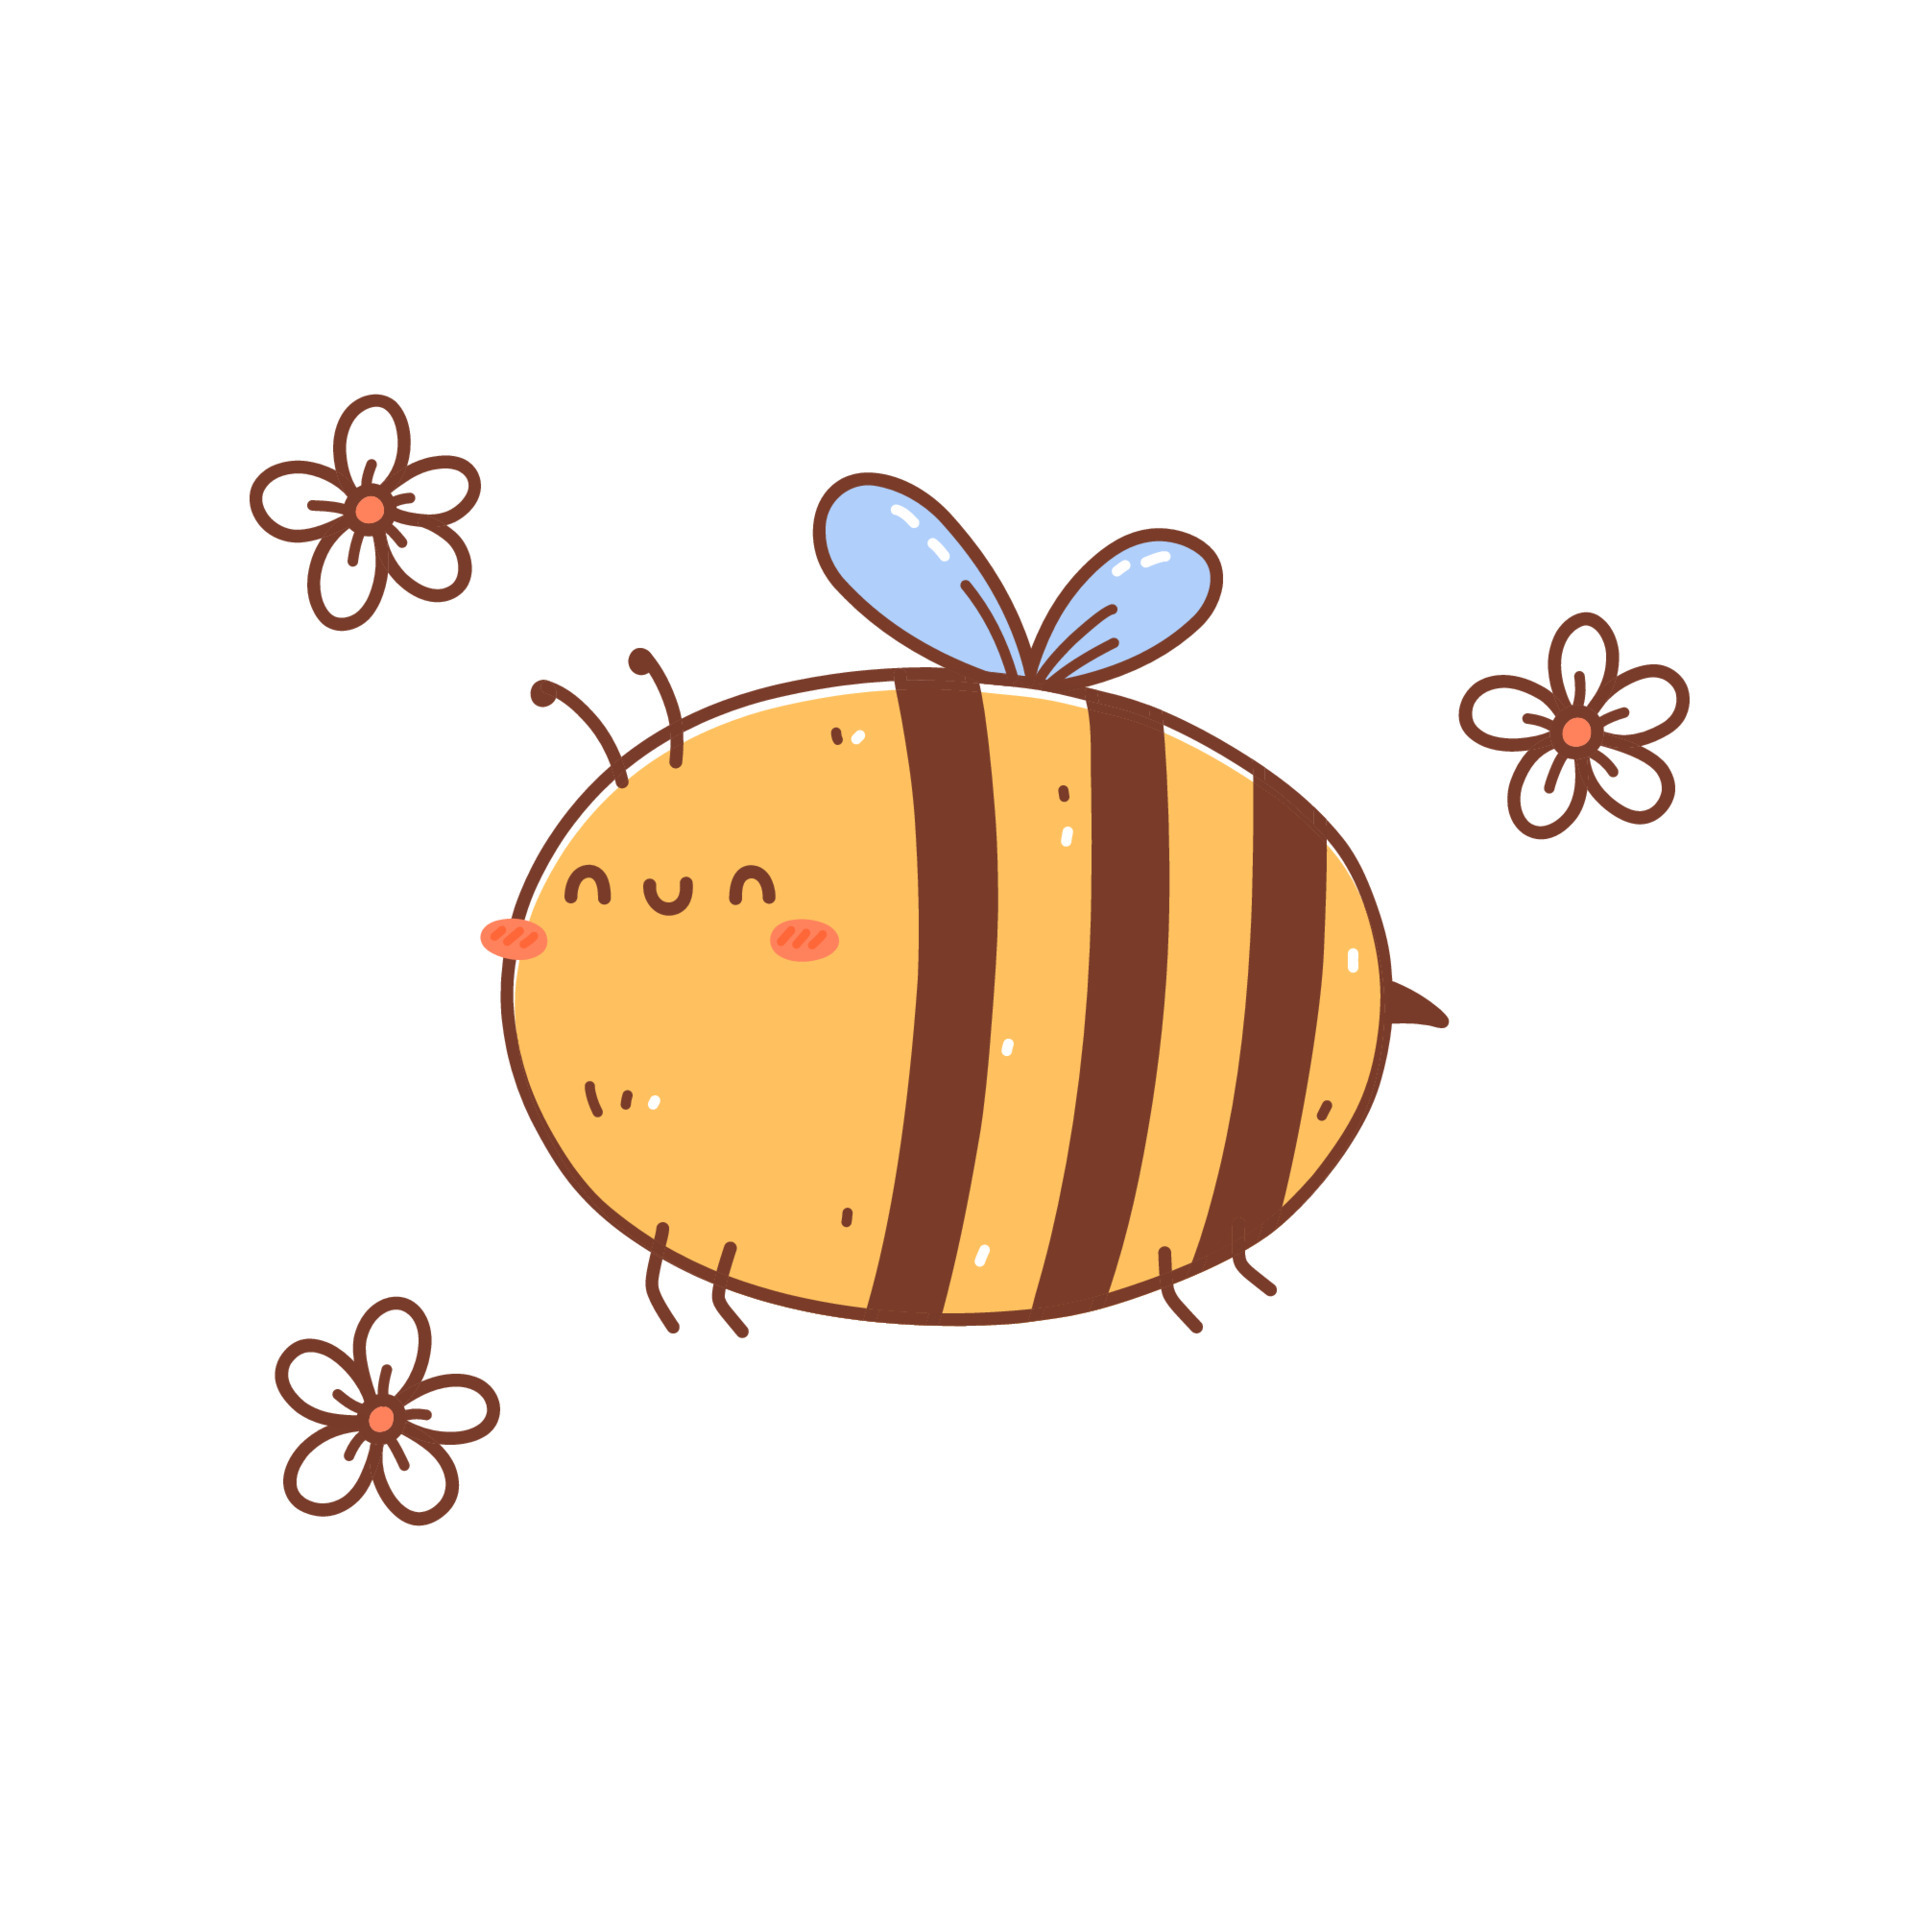 Kawaii Honeybee by honeyburger on DeviantArt